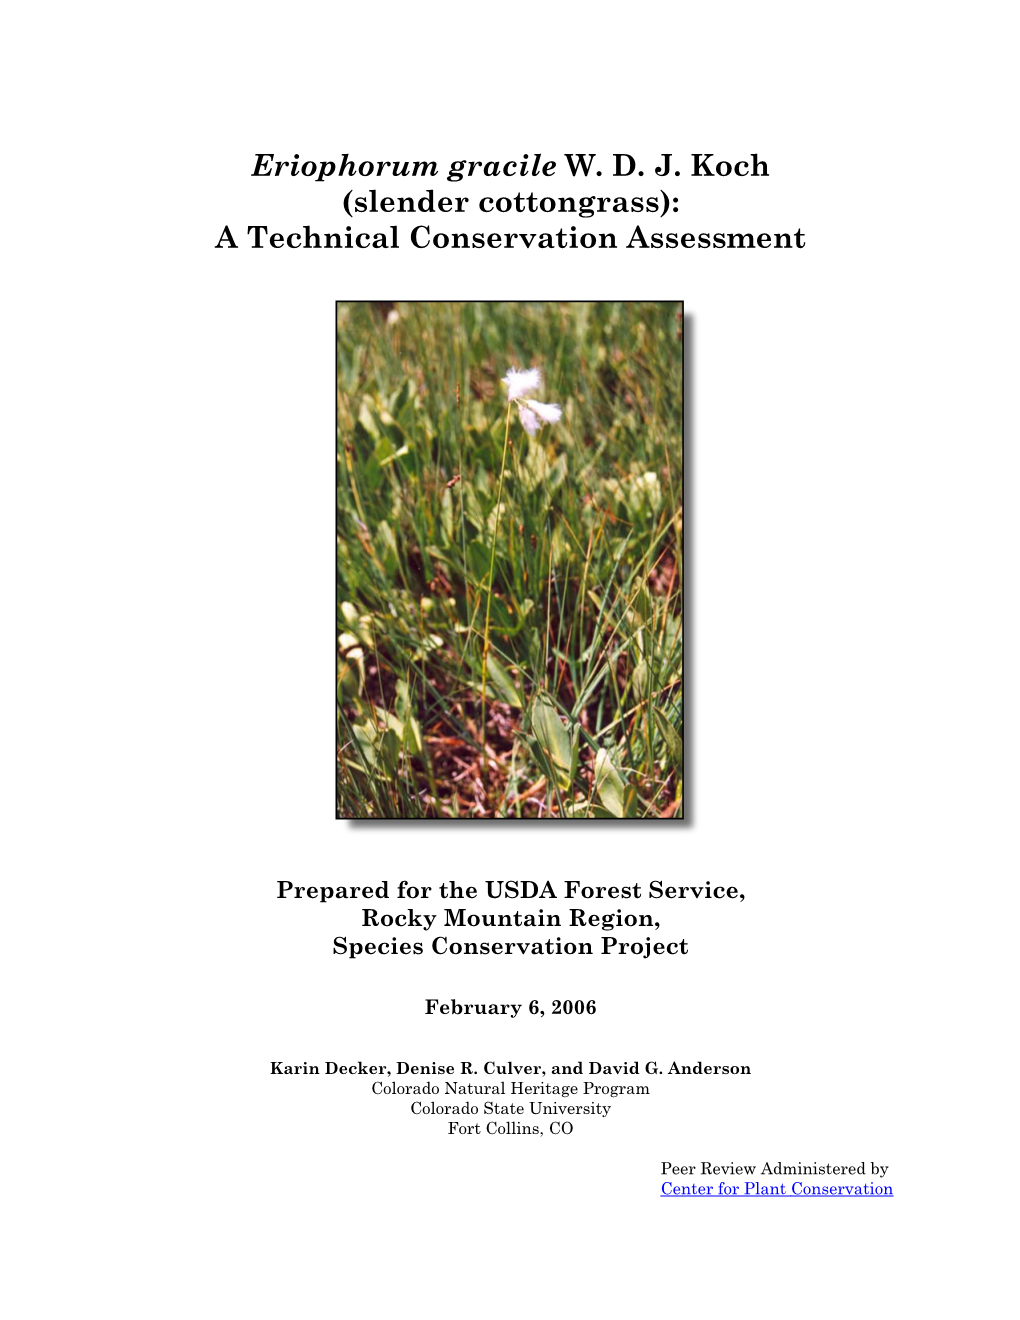 Eriophorum Gracile WDJ Koch (Slender Cottongrass)